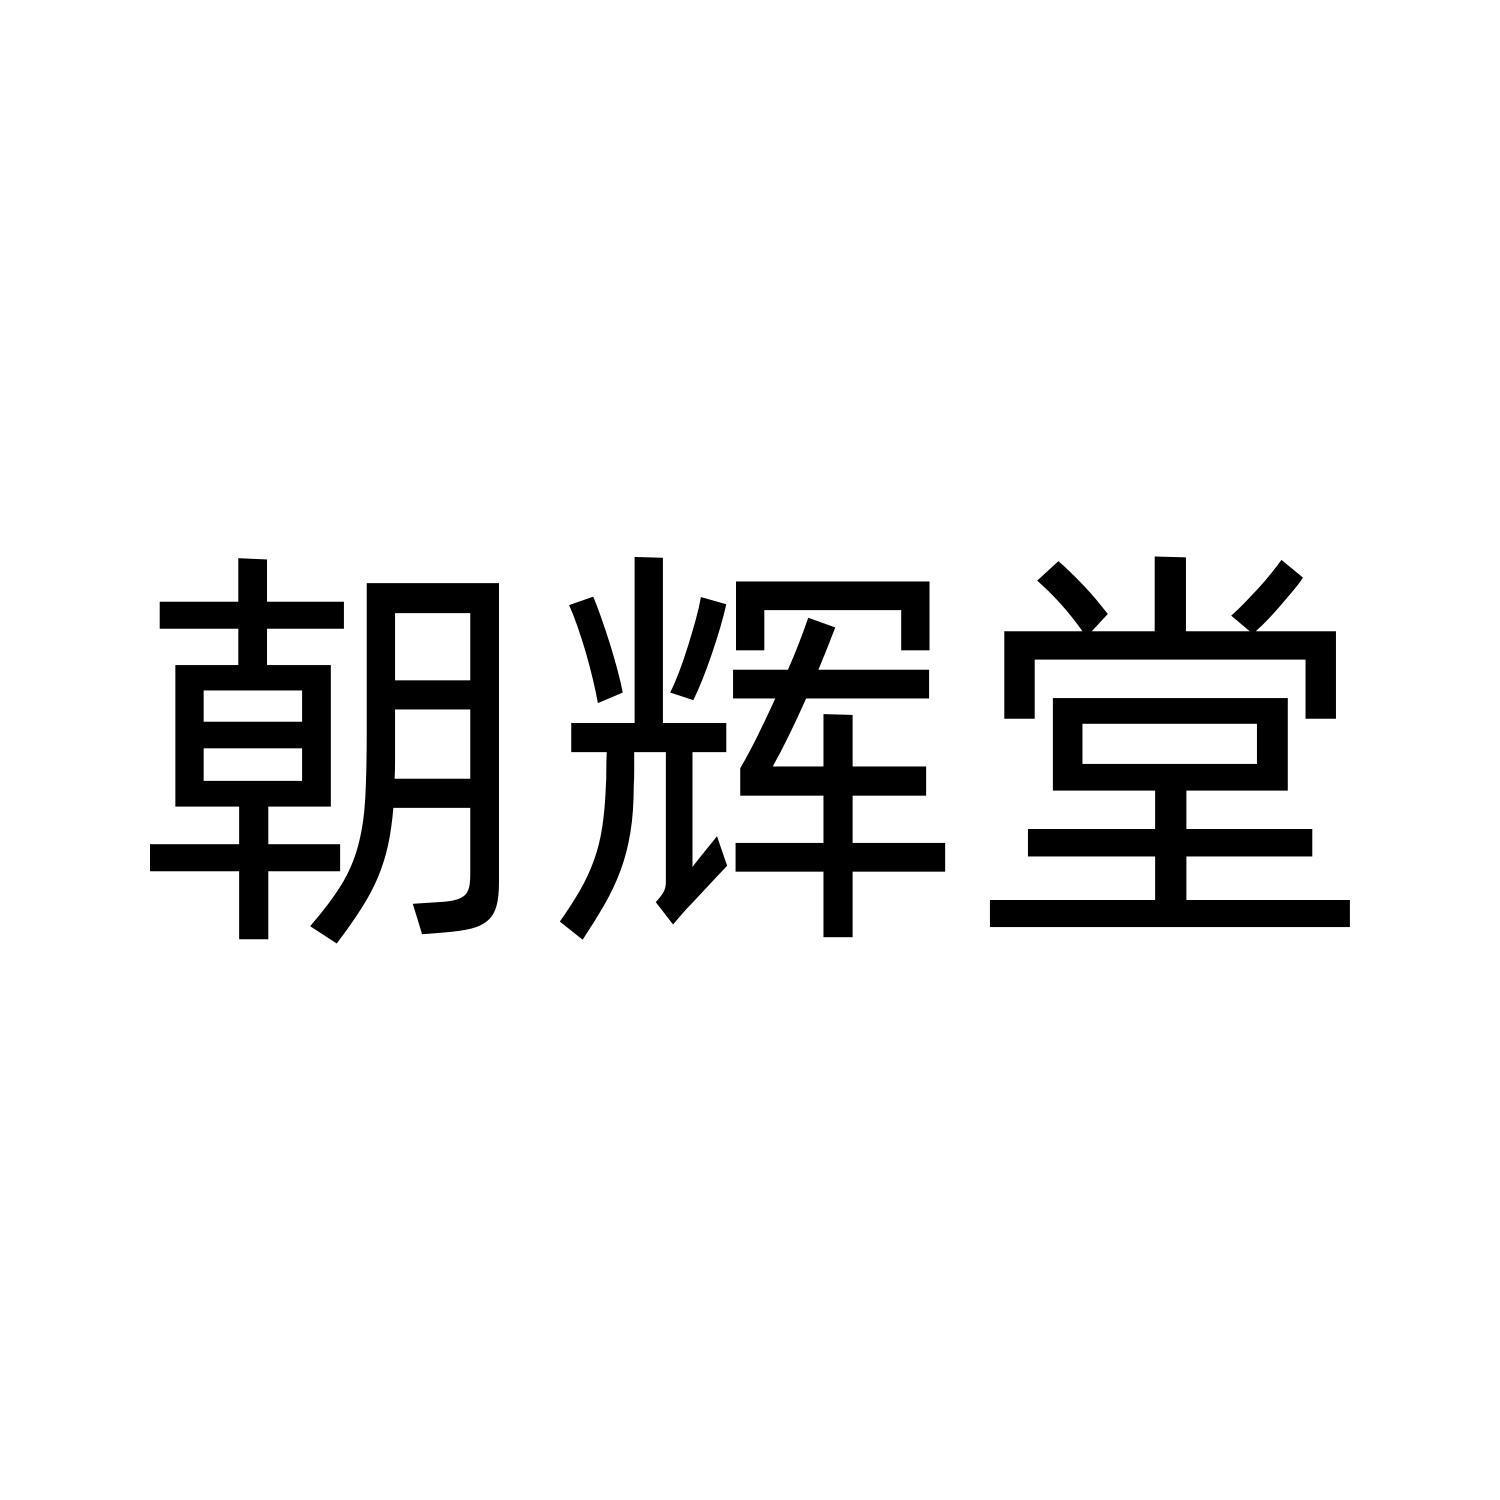 朝辉堂logo